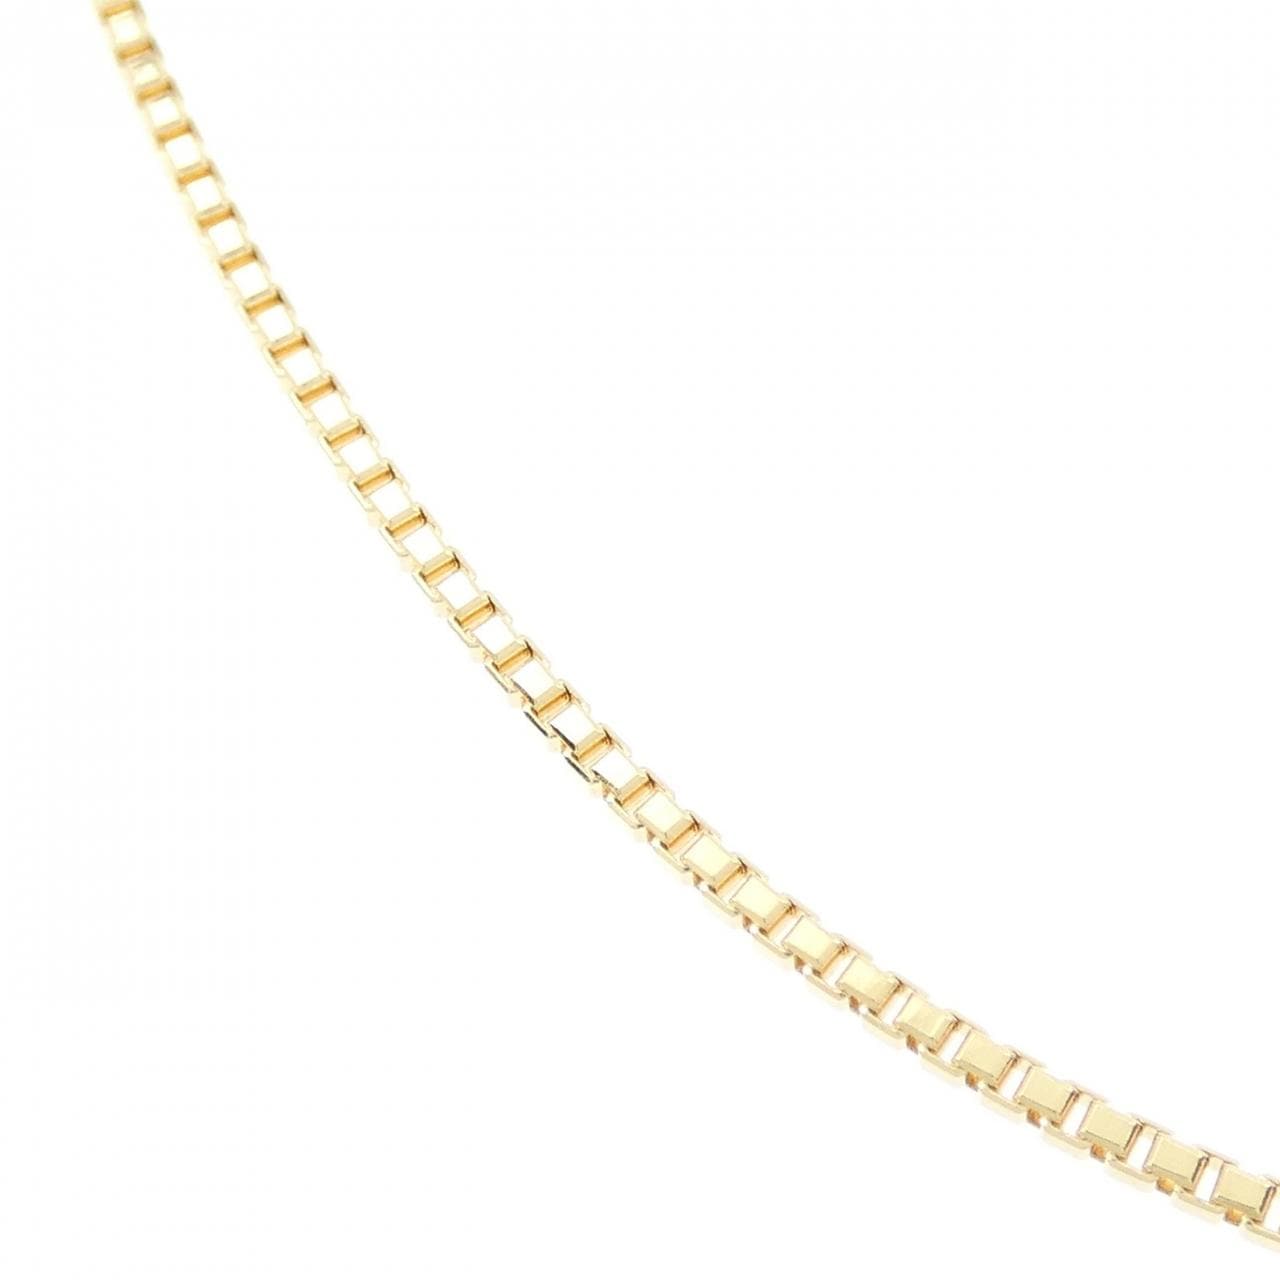 K18YG Venetian Chain Necklace